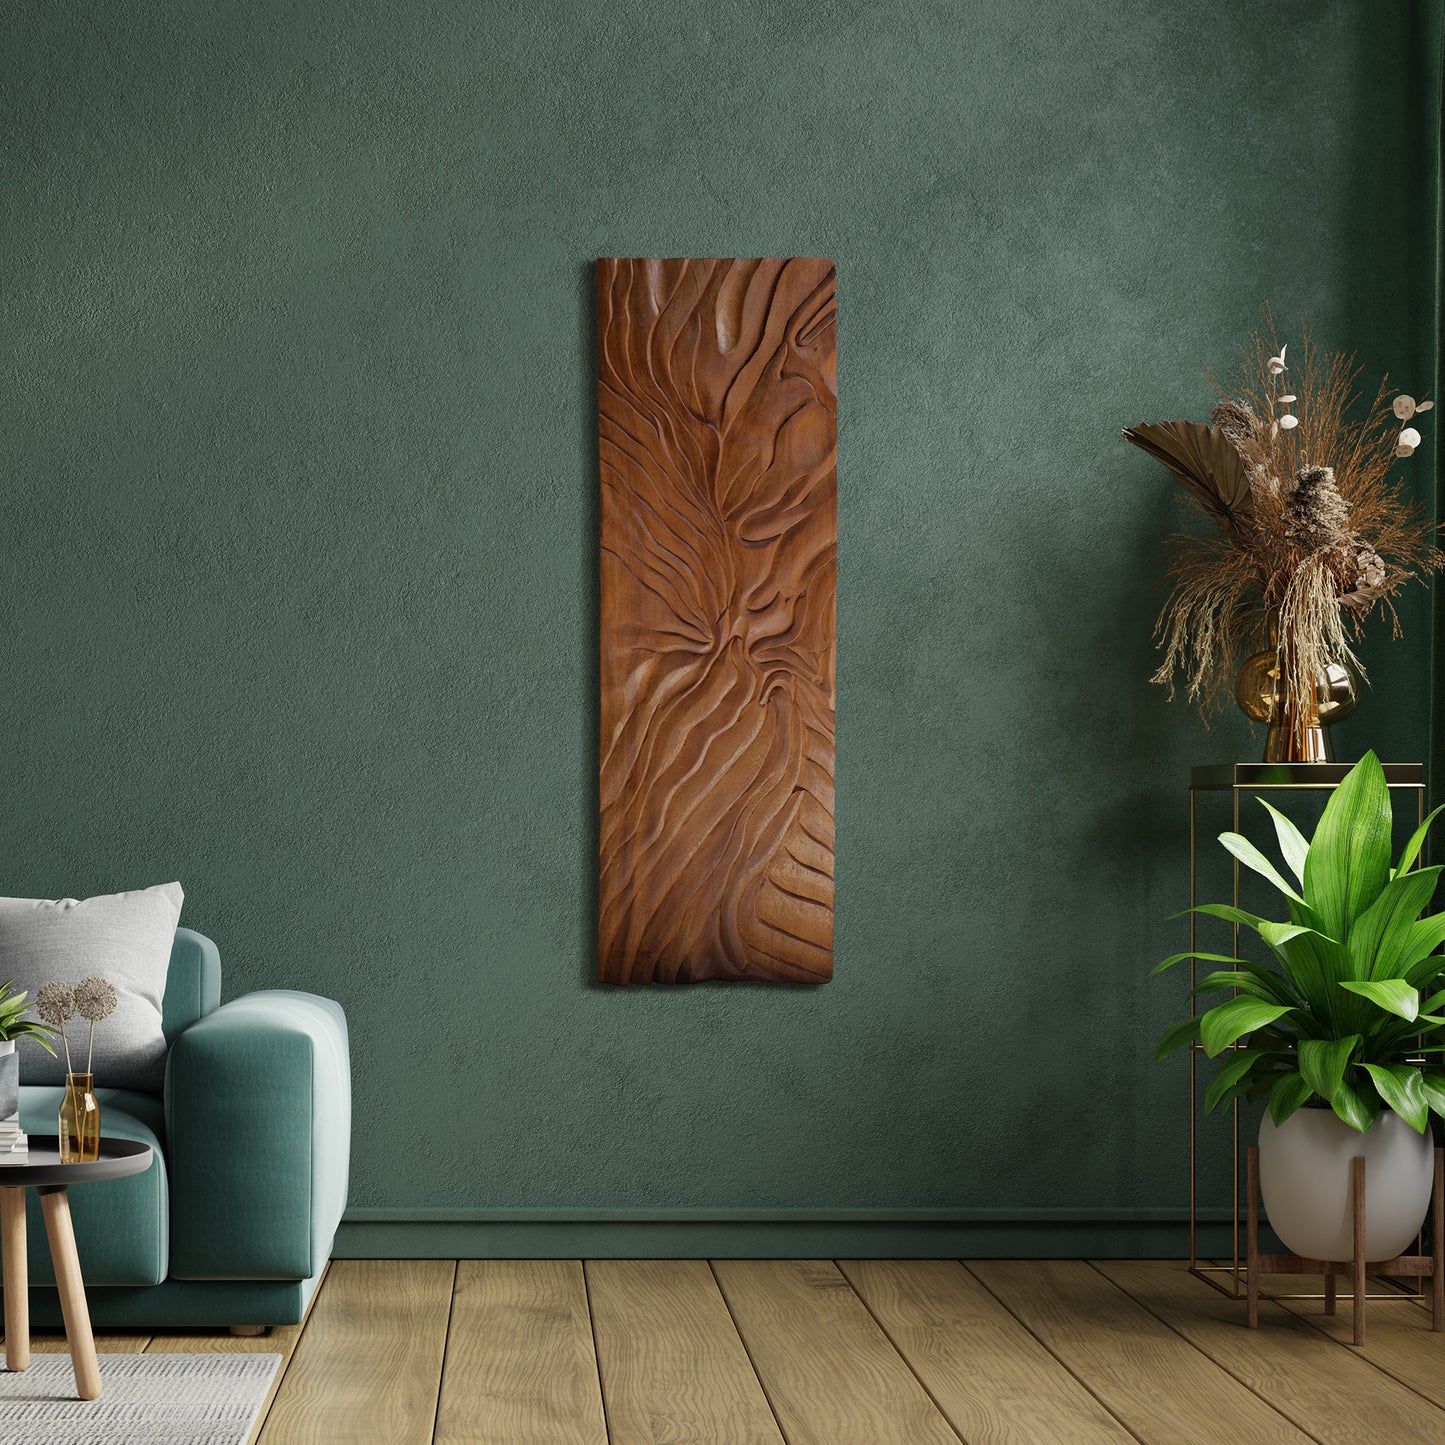 Wooden Sculpture Wall Decor - 150 cm - Suar Wood - Natural Oil finish